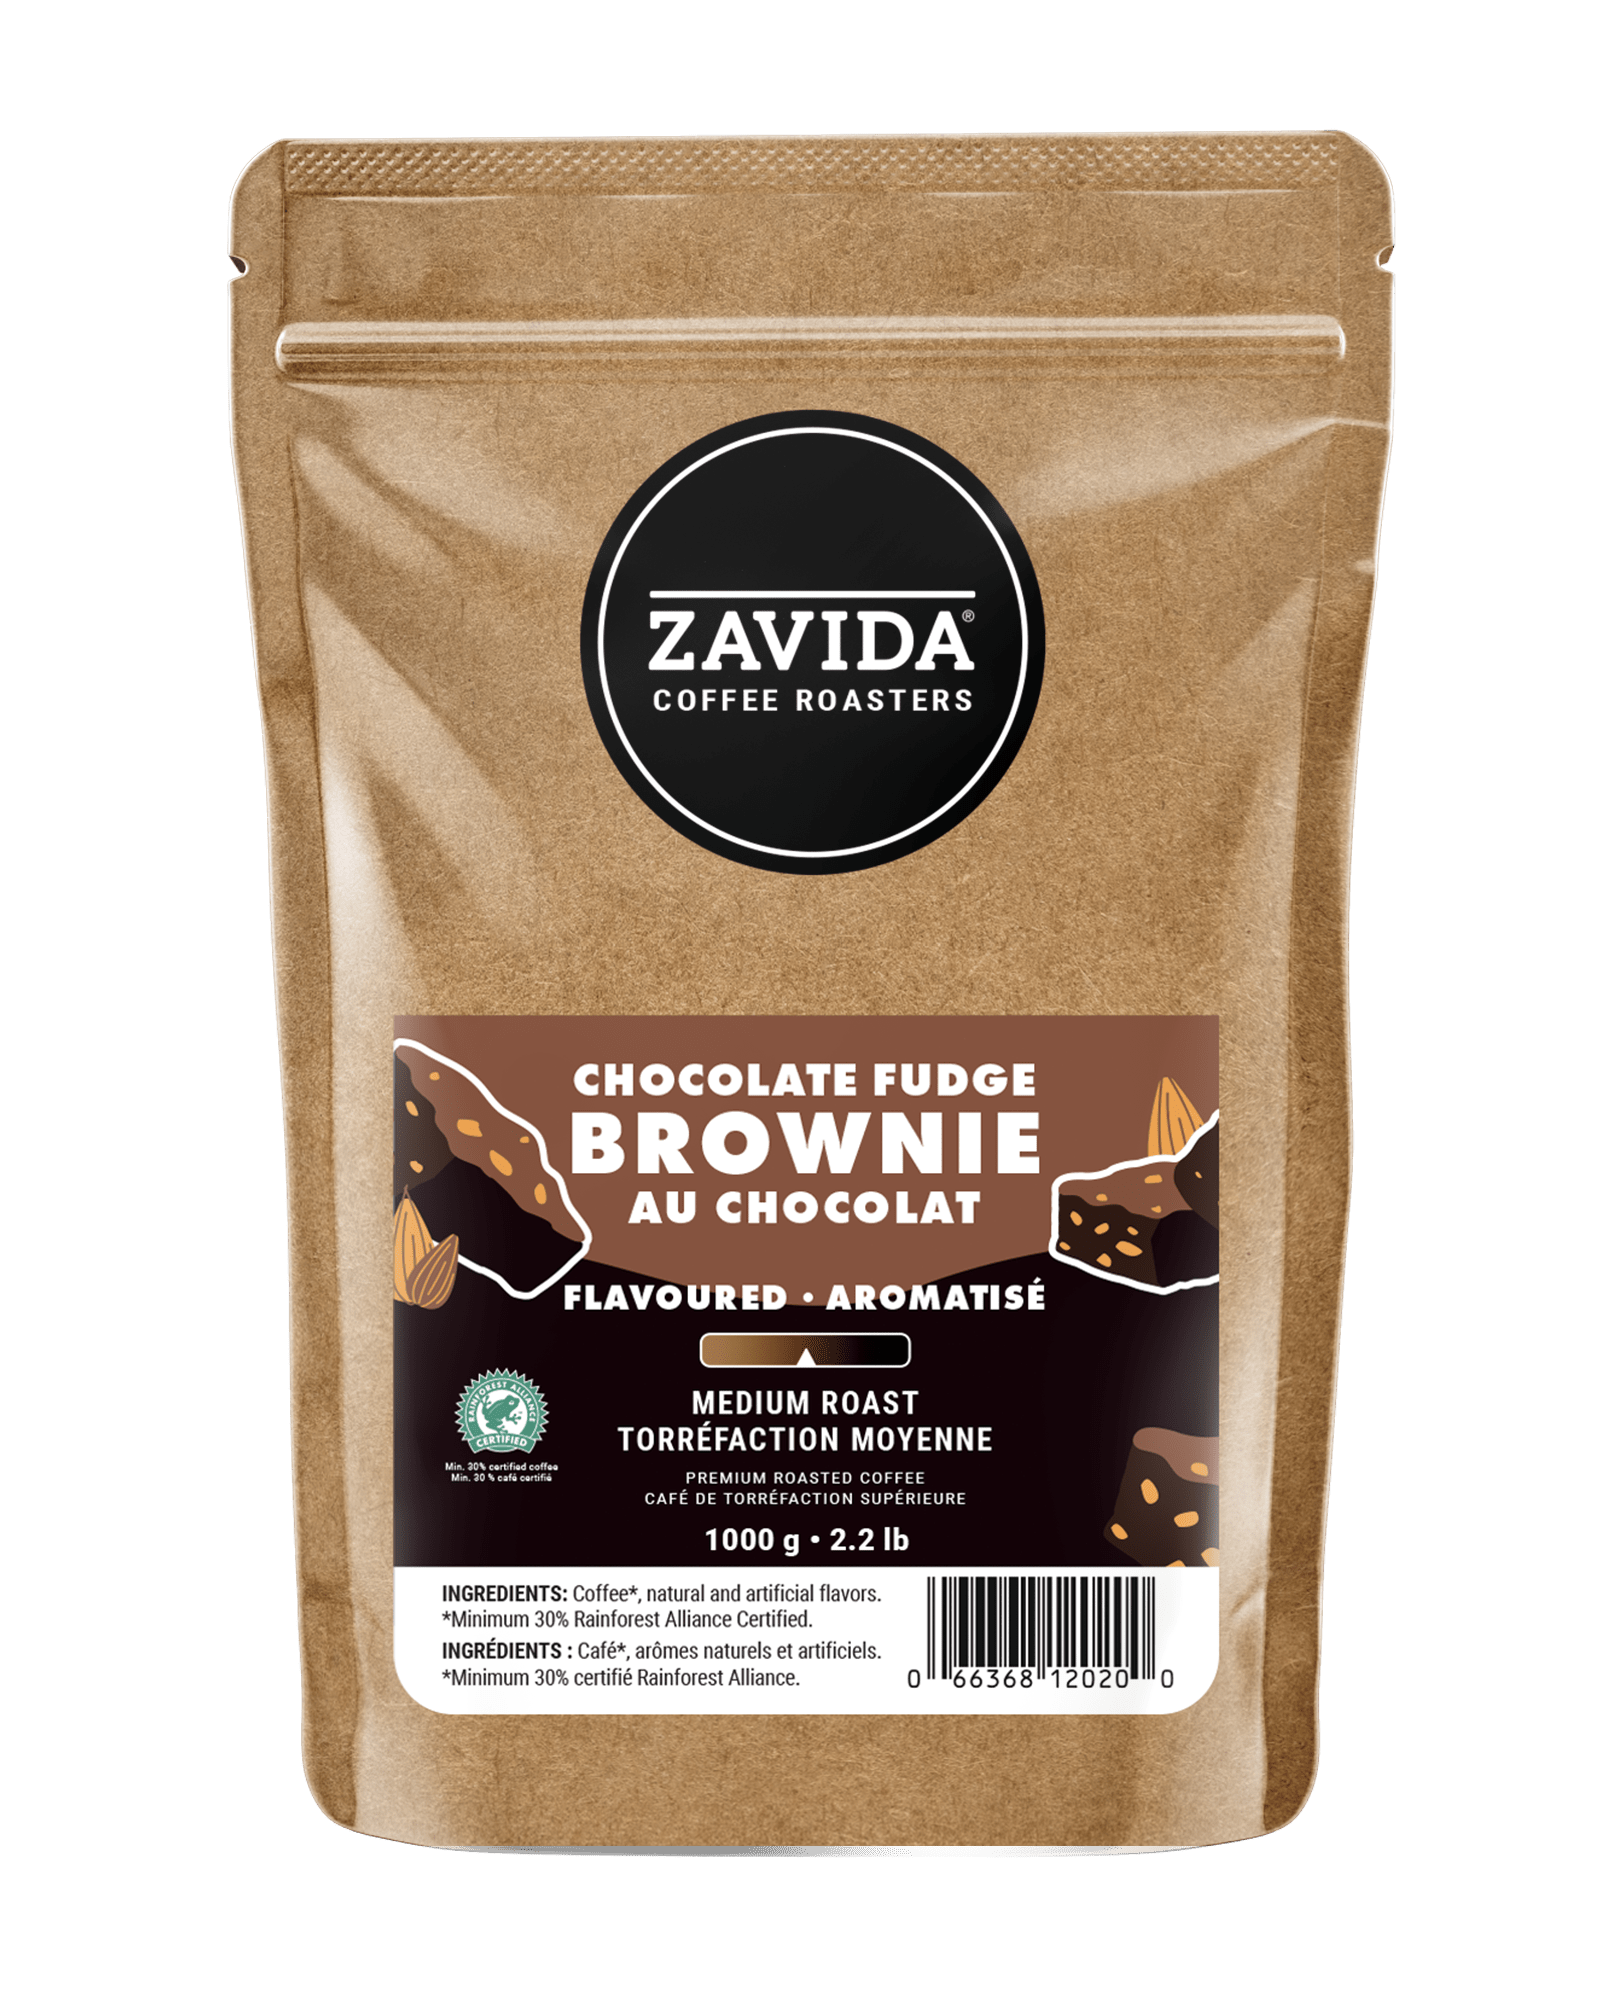 LIMITED EDITION Chocolate Fudge Brownie - 1 kg - Zavida Coffee